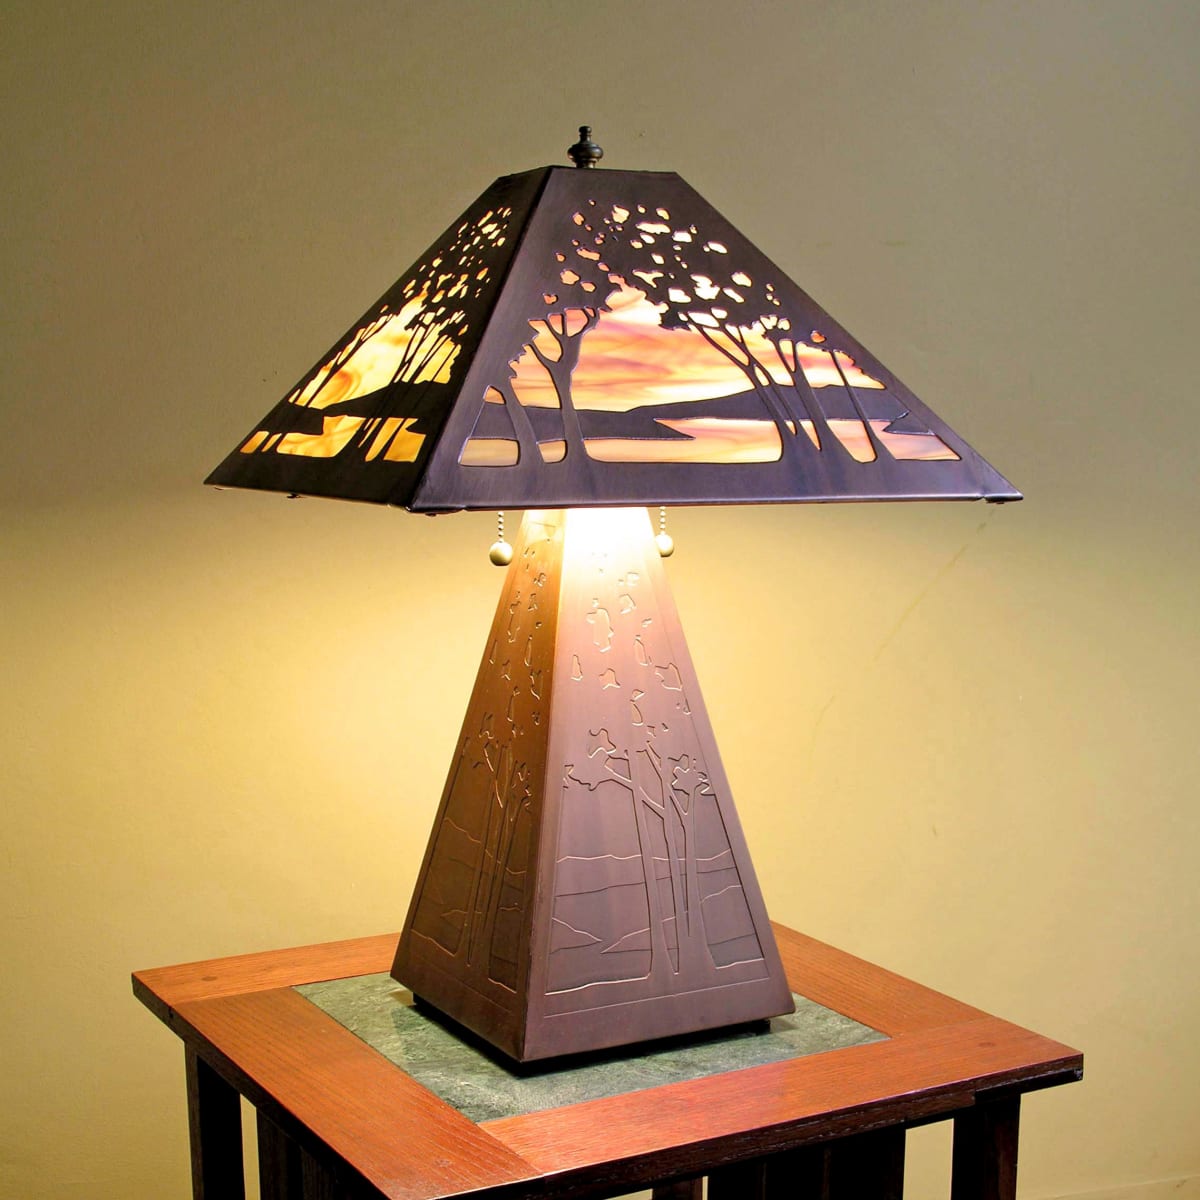 methodologie Overtekenen open haard Lamps & Lighting, Inside and Out - Design for the Arts & Crafts House |  Arts & Crafts Homes Online